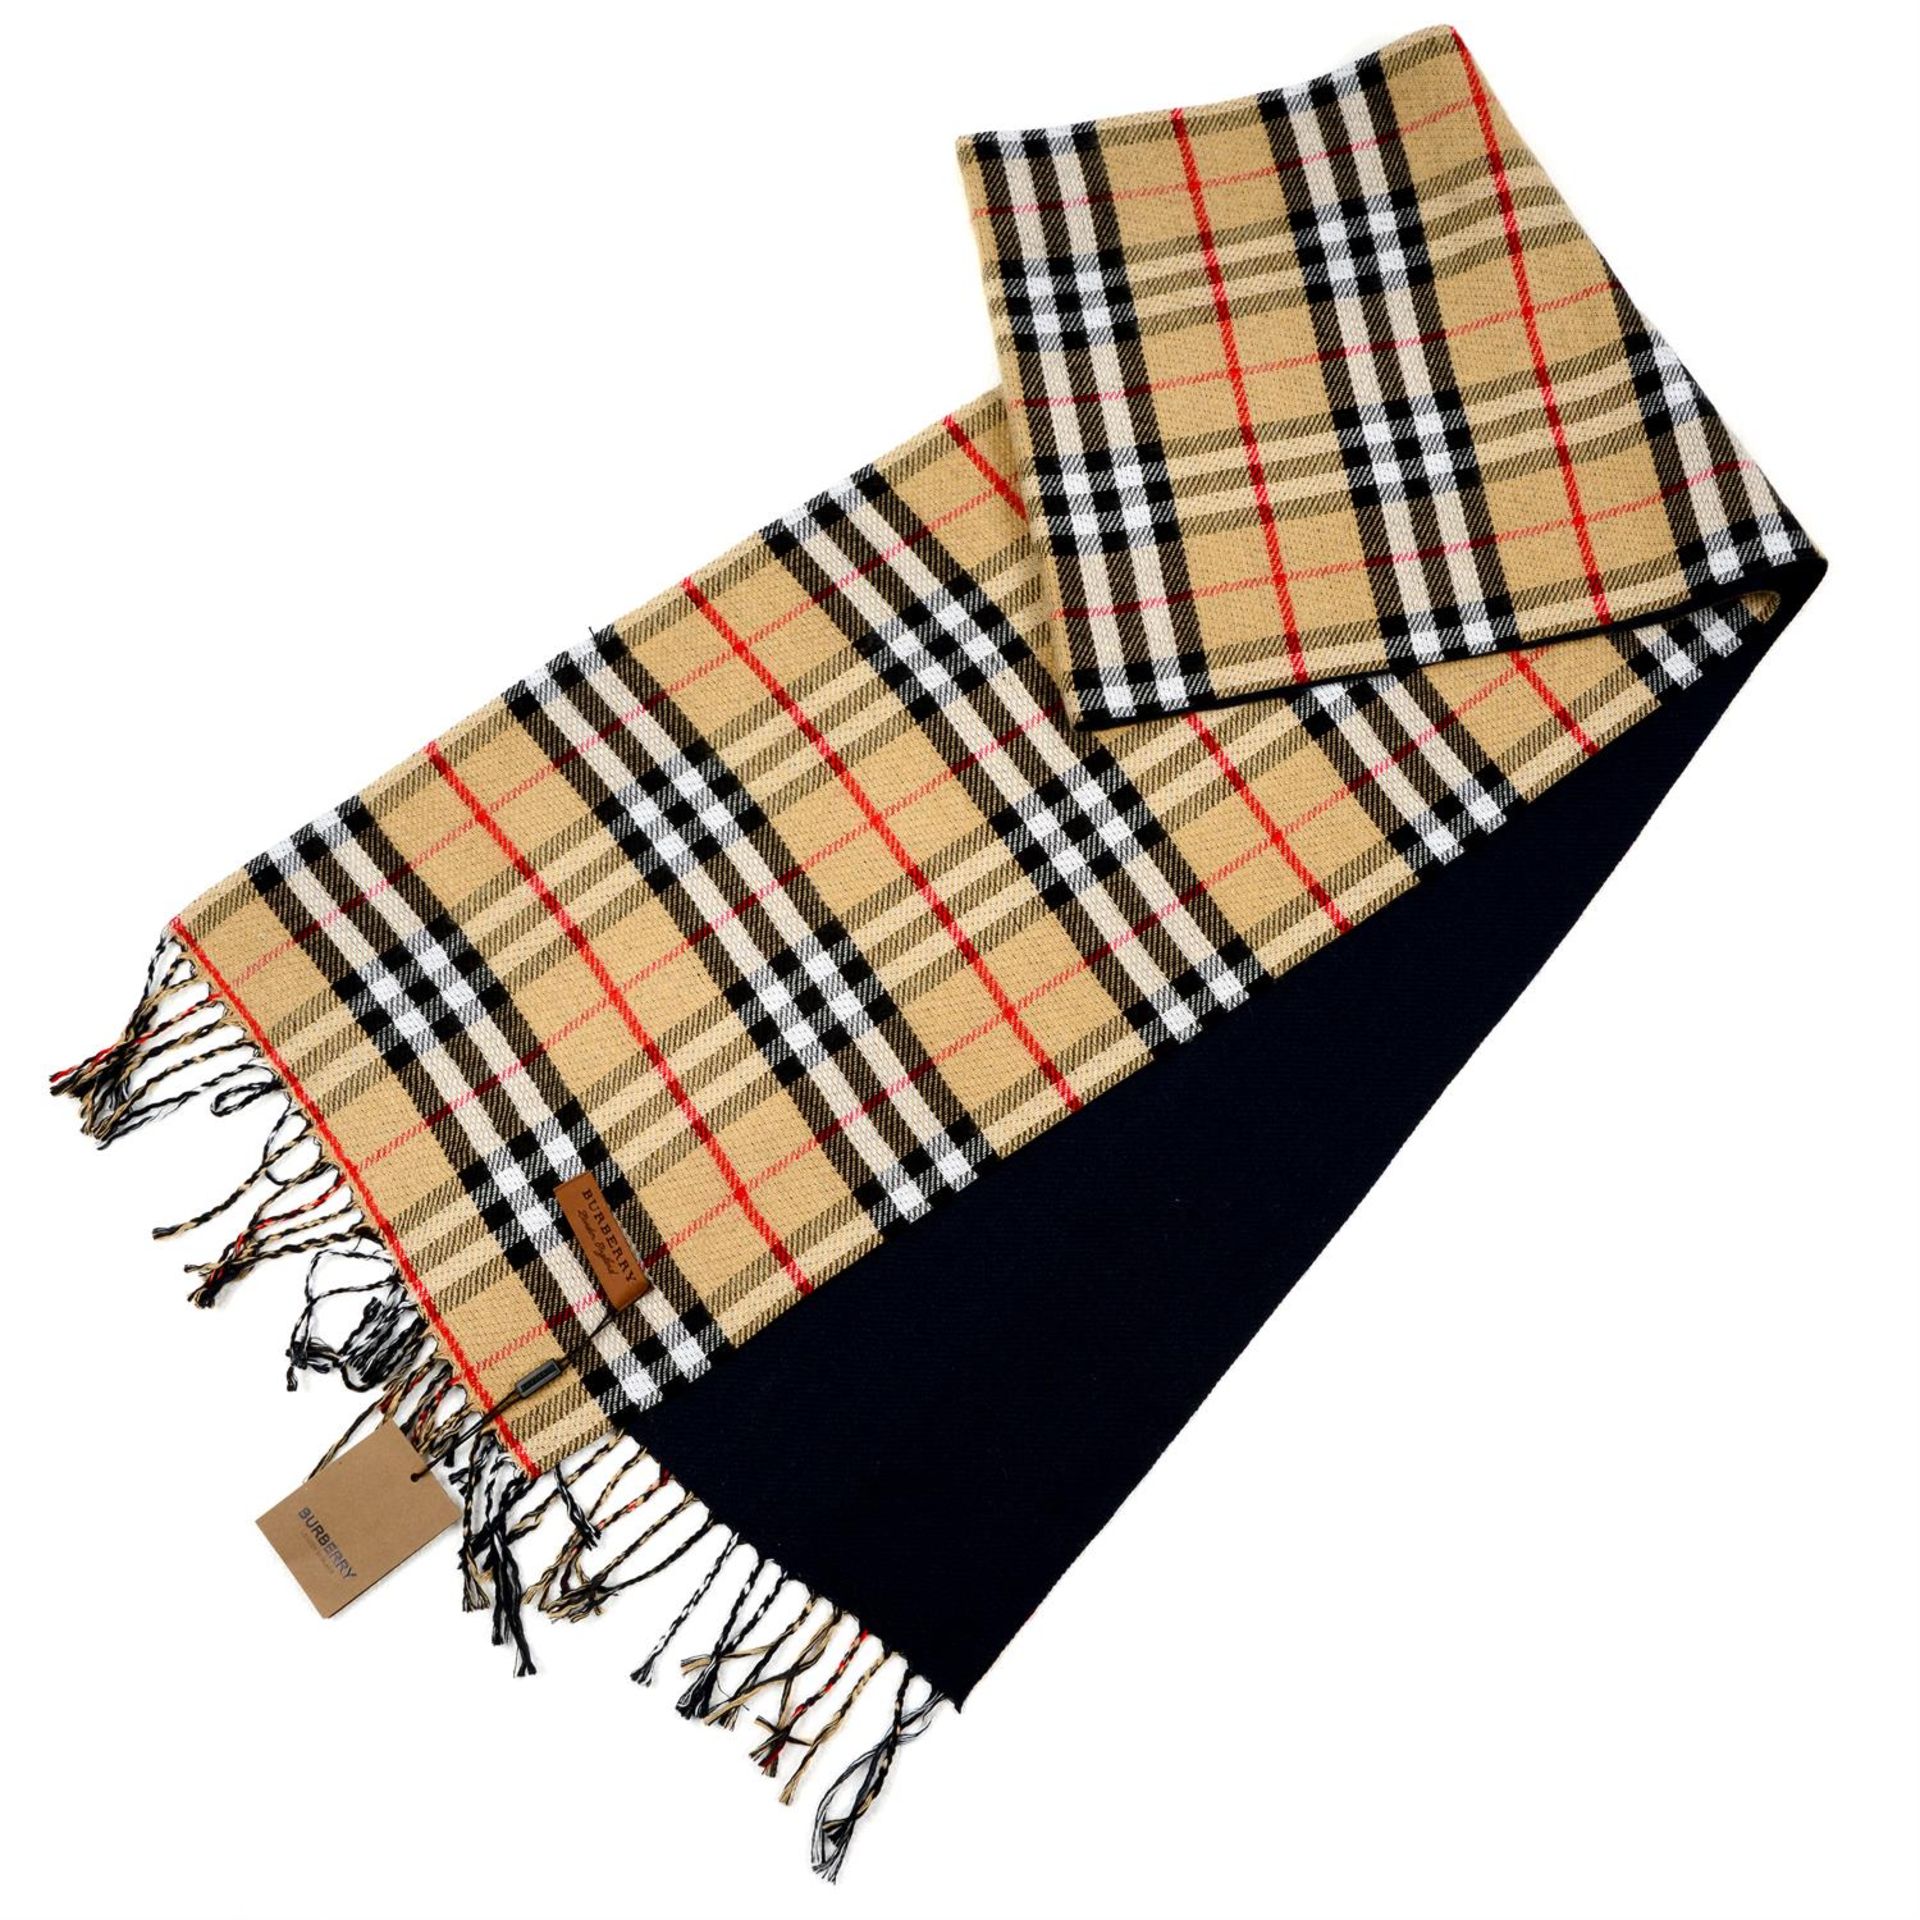 BURBERRY - a reversible Nova check wool scarf.